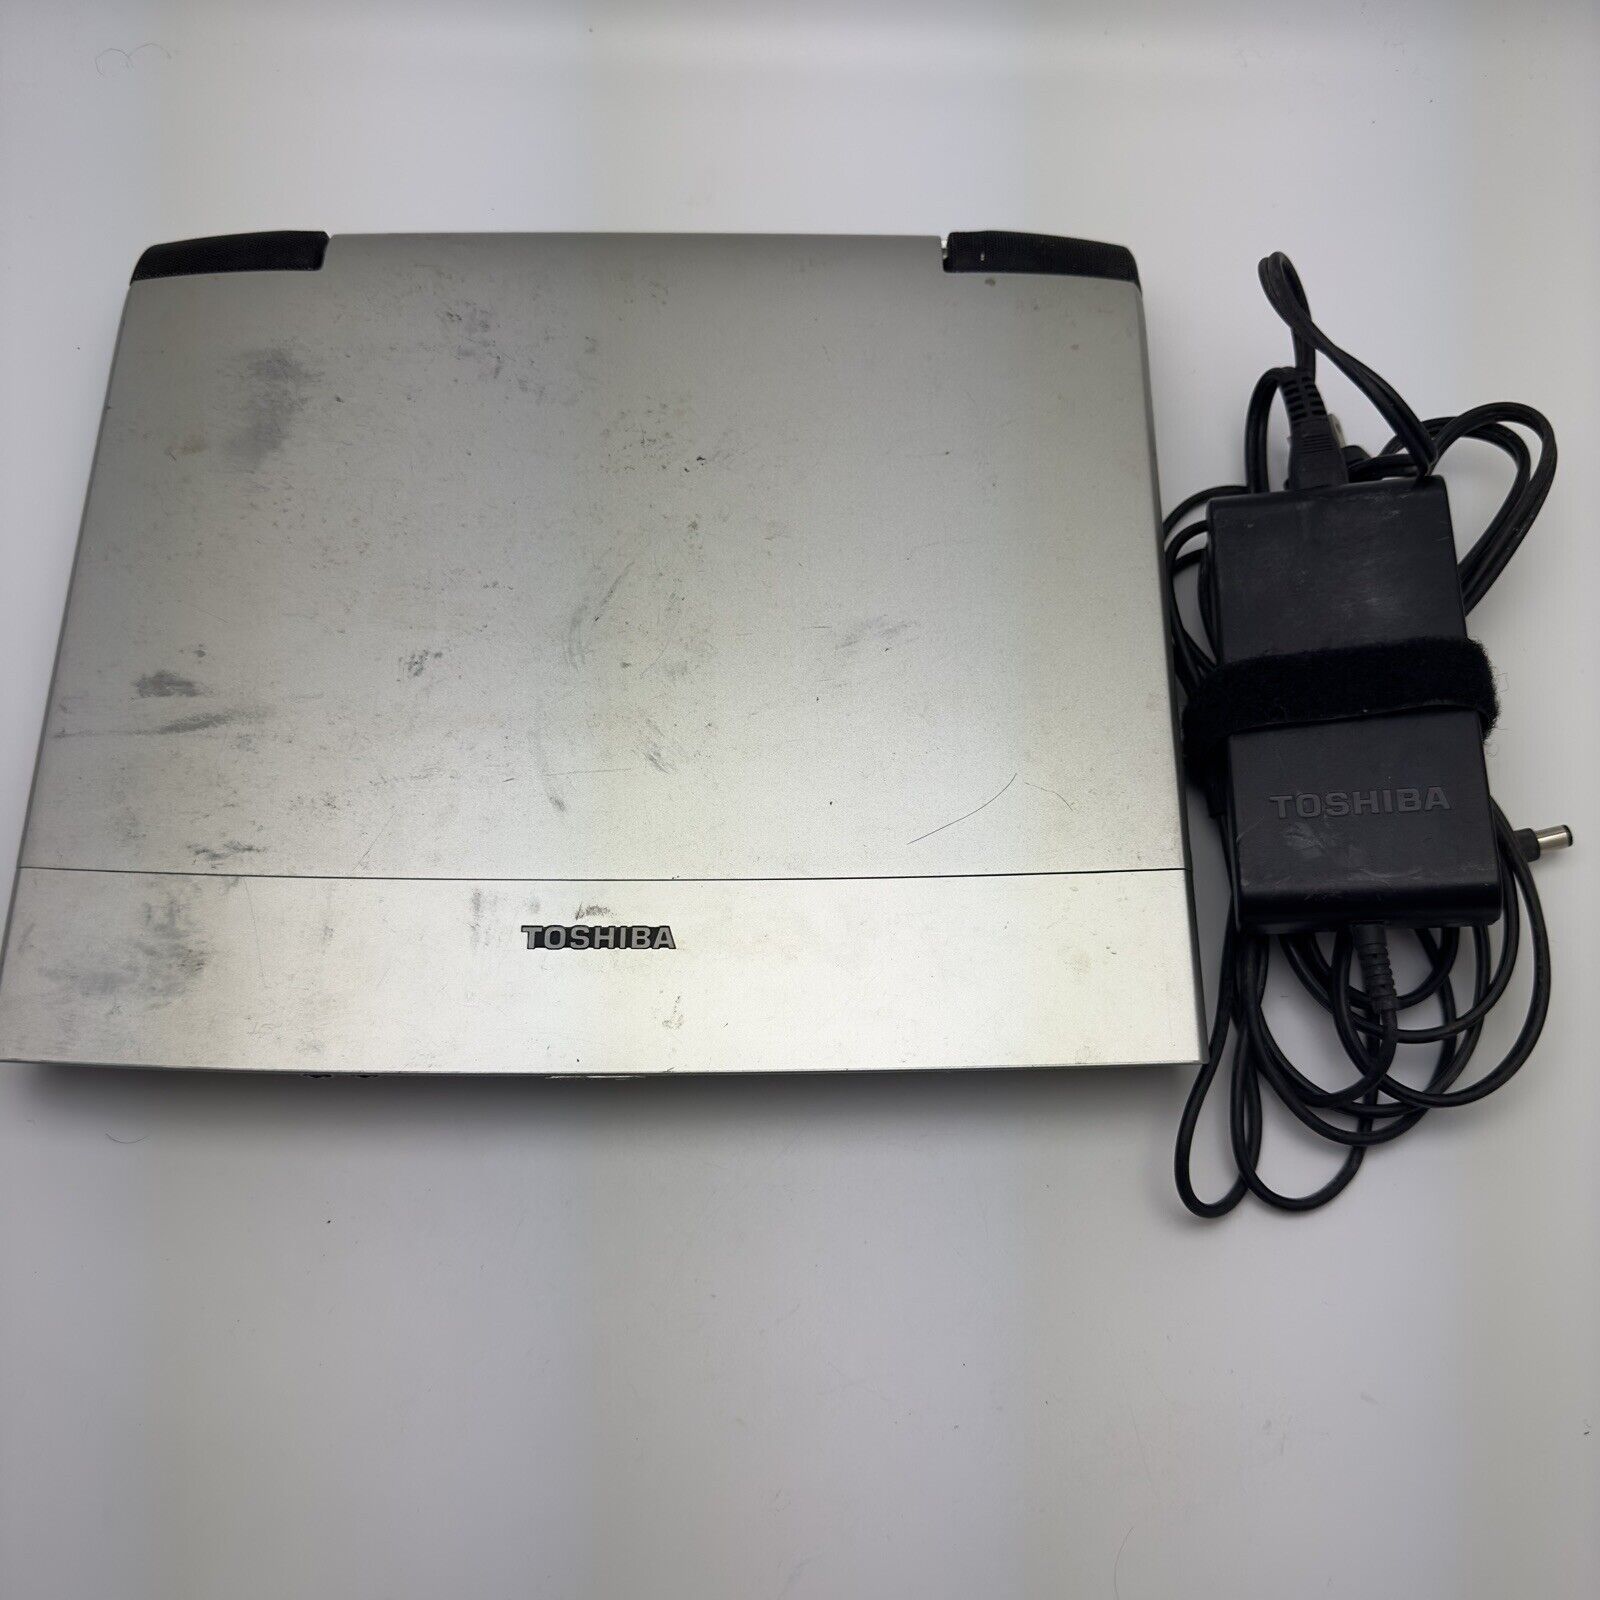 Uncleaned Toshiba Tecra T9000 vintage RTS gamer Laptop Windows XP Pentium III 3